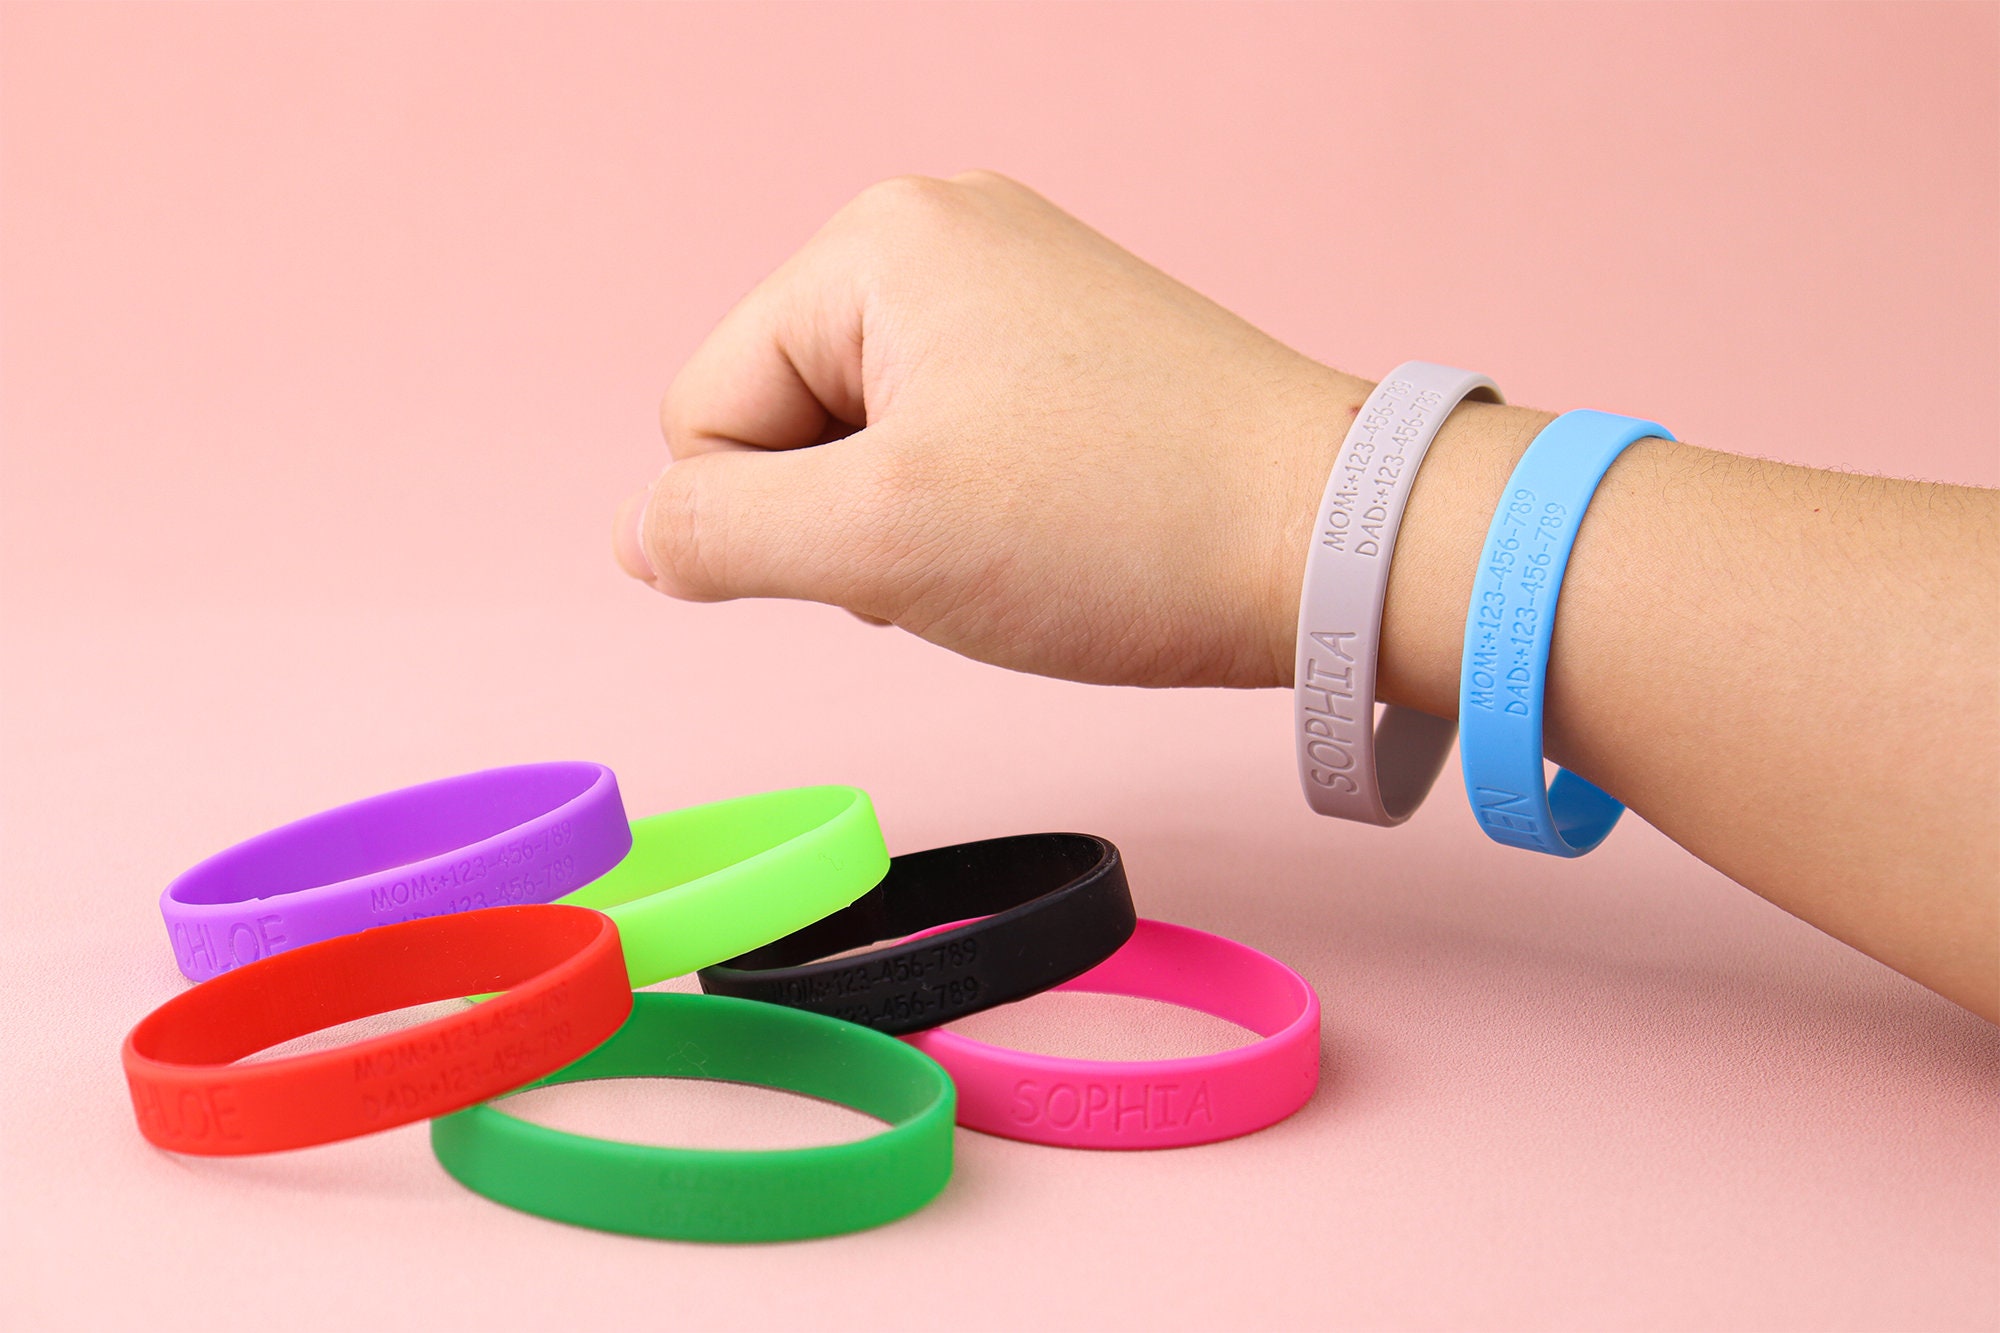 Personalized Silicone Wristbands Bulk with Text Message Custom Rubber  Bracelets Customized Rubber Band Bracelets for Events,  Motivation,Fundraisers, Bulk Bracelets - valleyresorts.co.uk